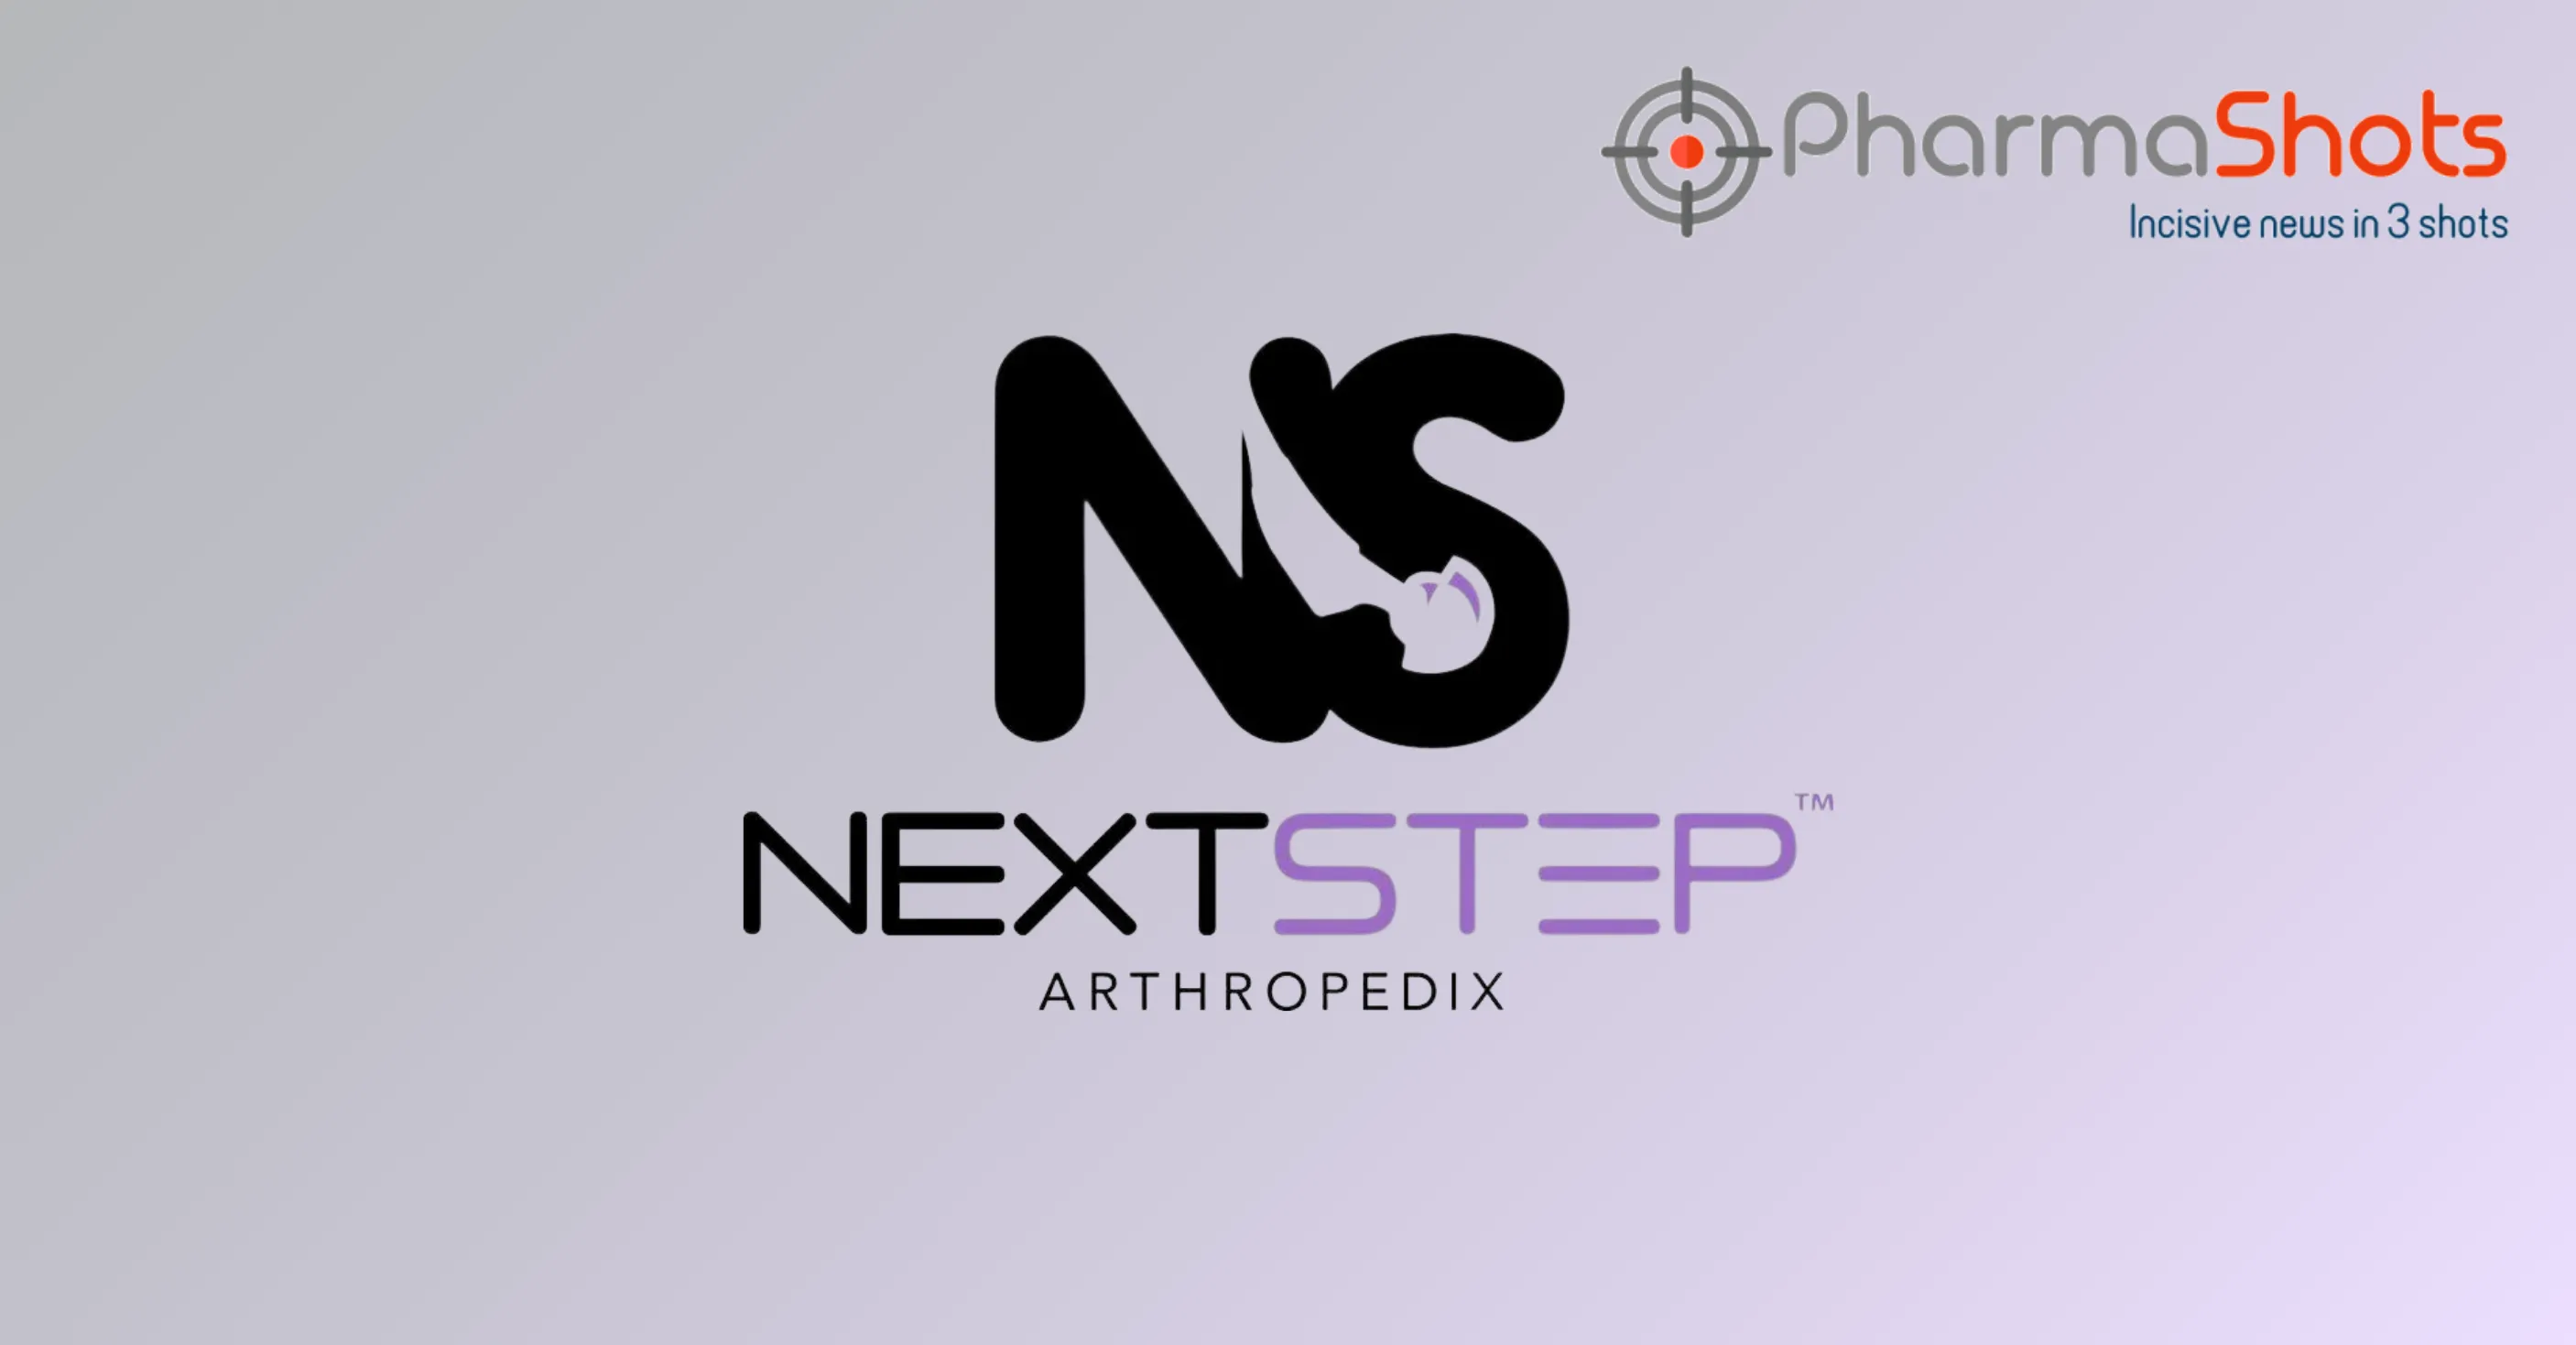 NextStep Arthropedix to Introduce TheRay Hip System